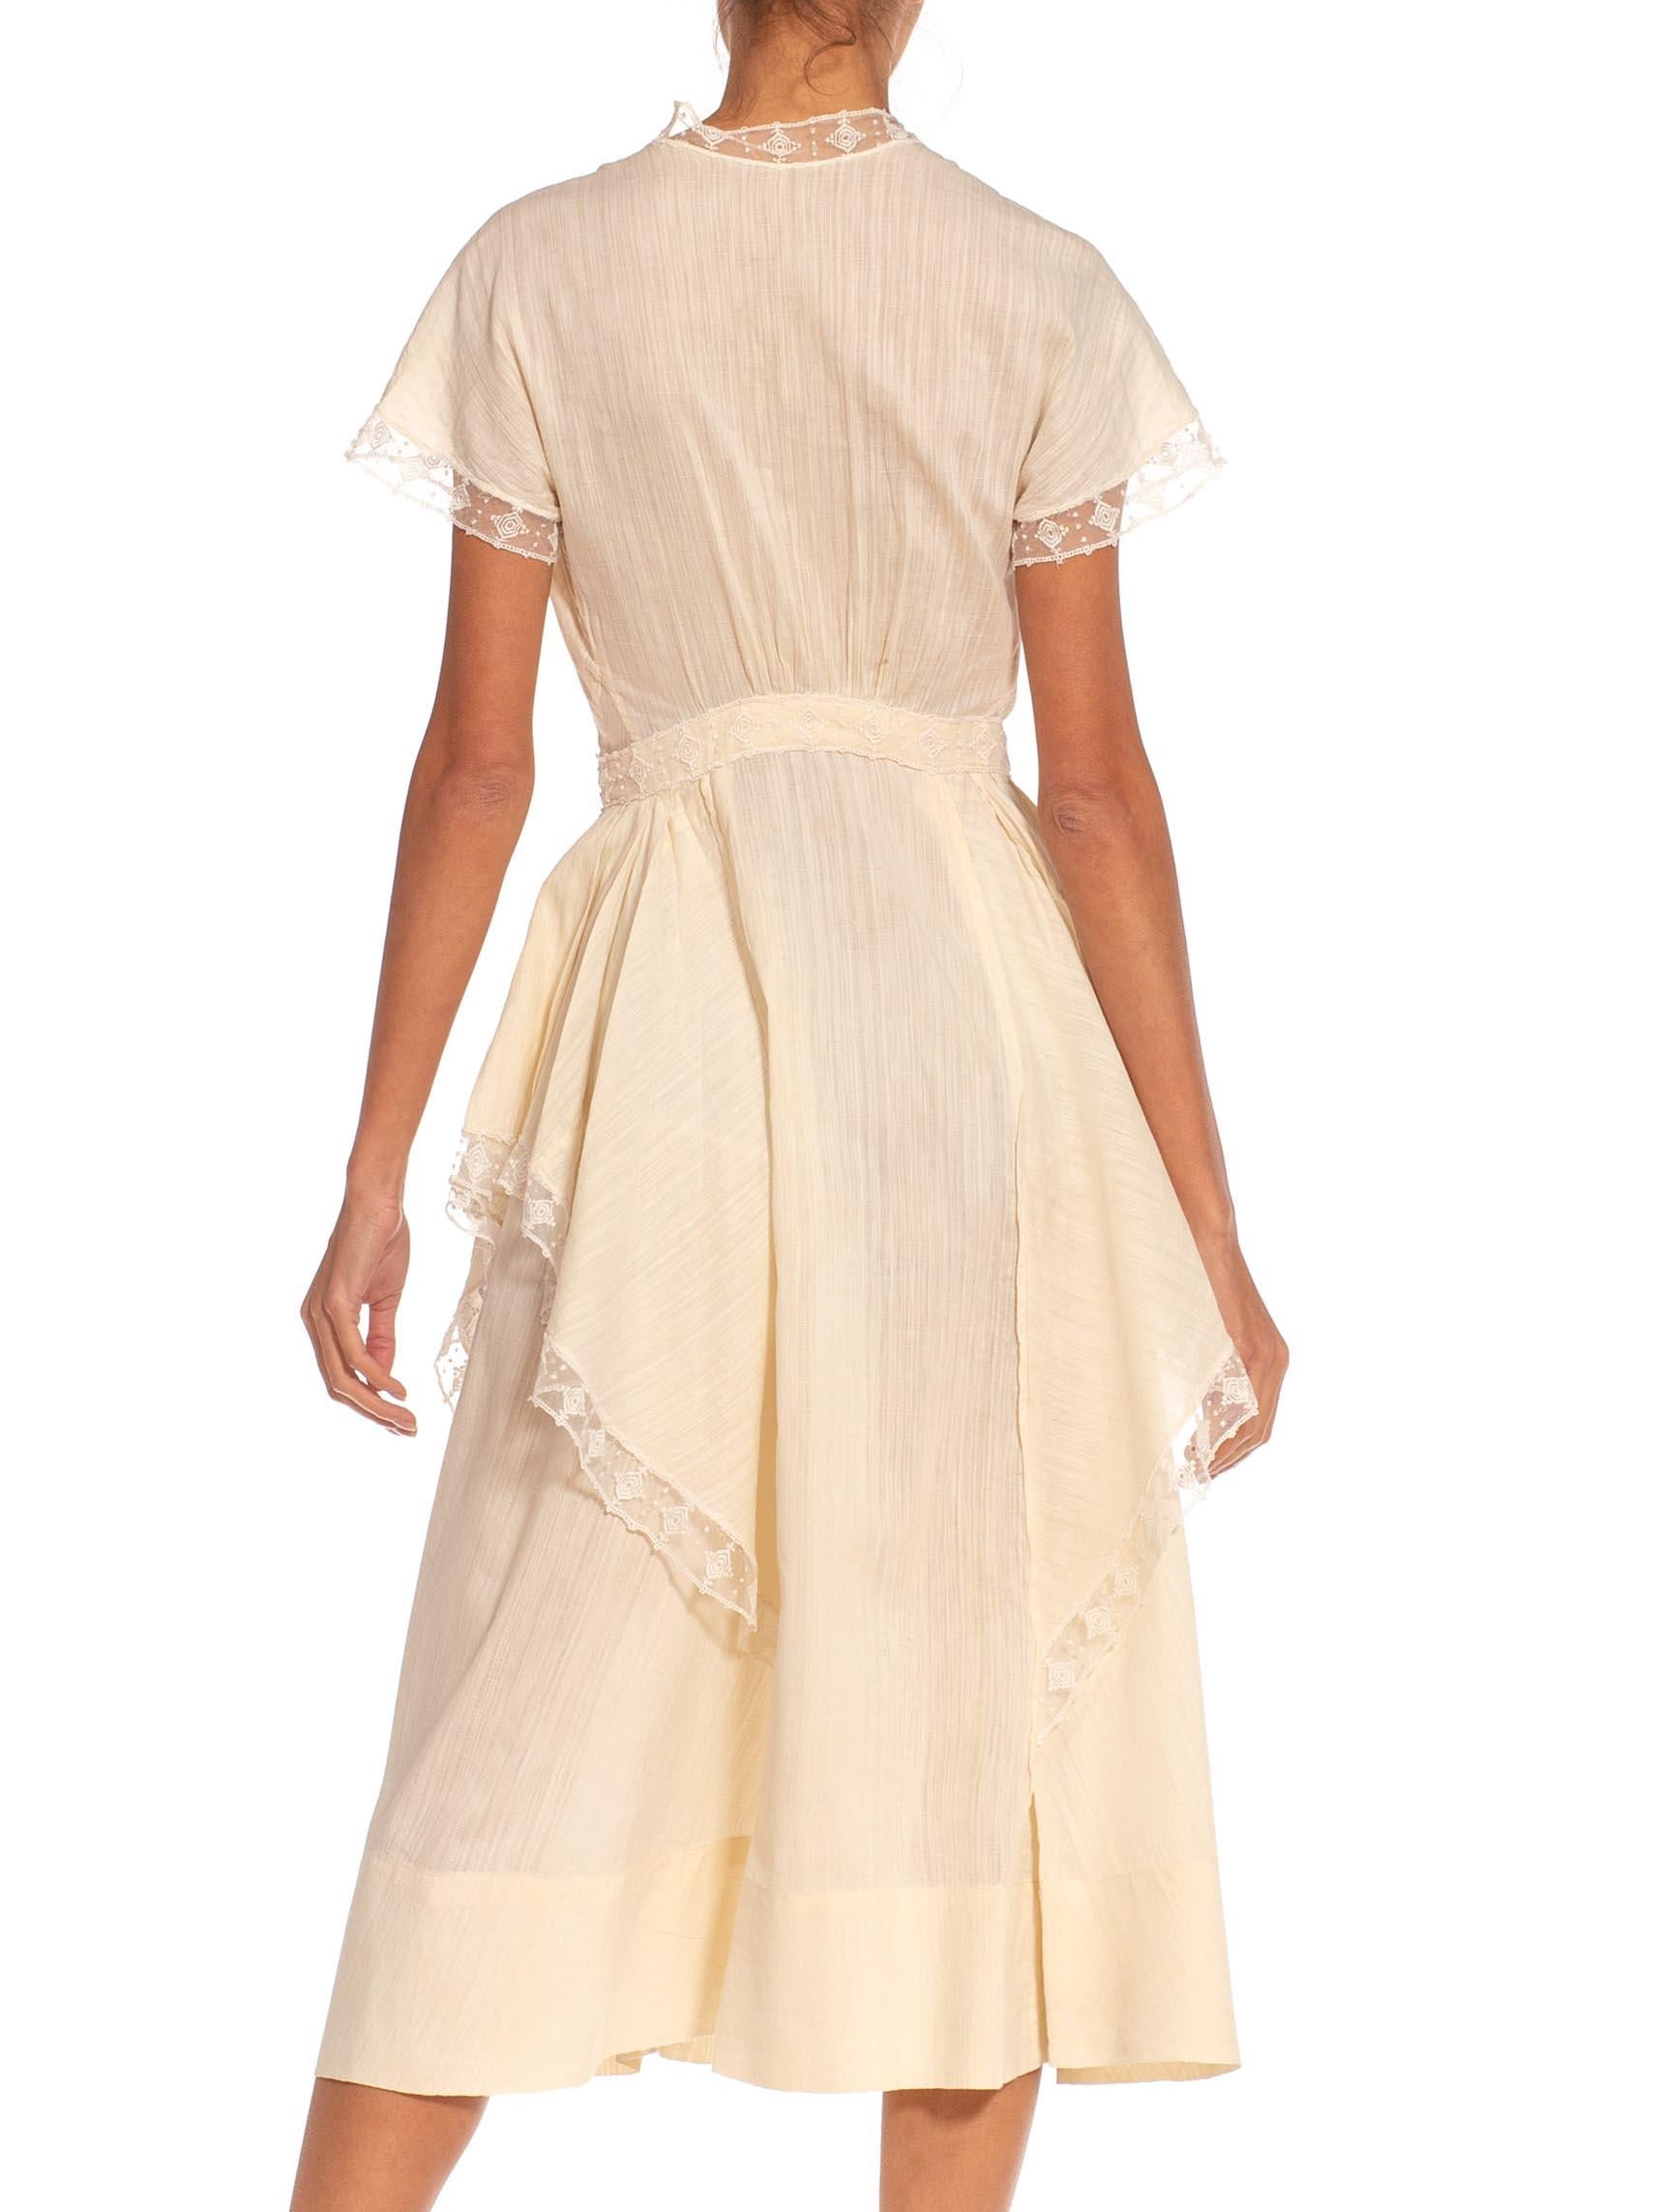 Edwardian Off White Silk Cotton & Lace Trim Day Dress 4